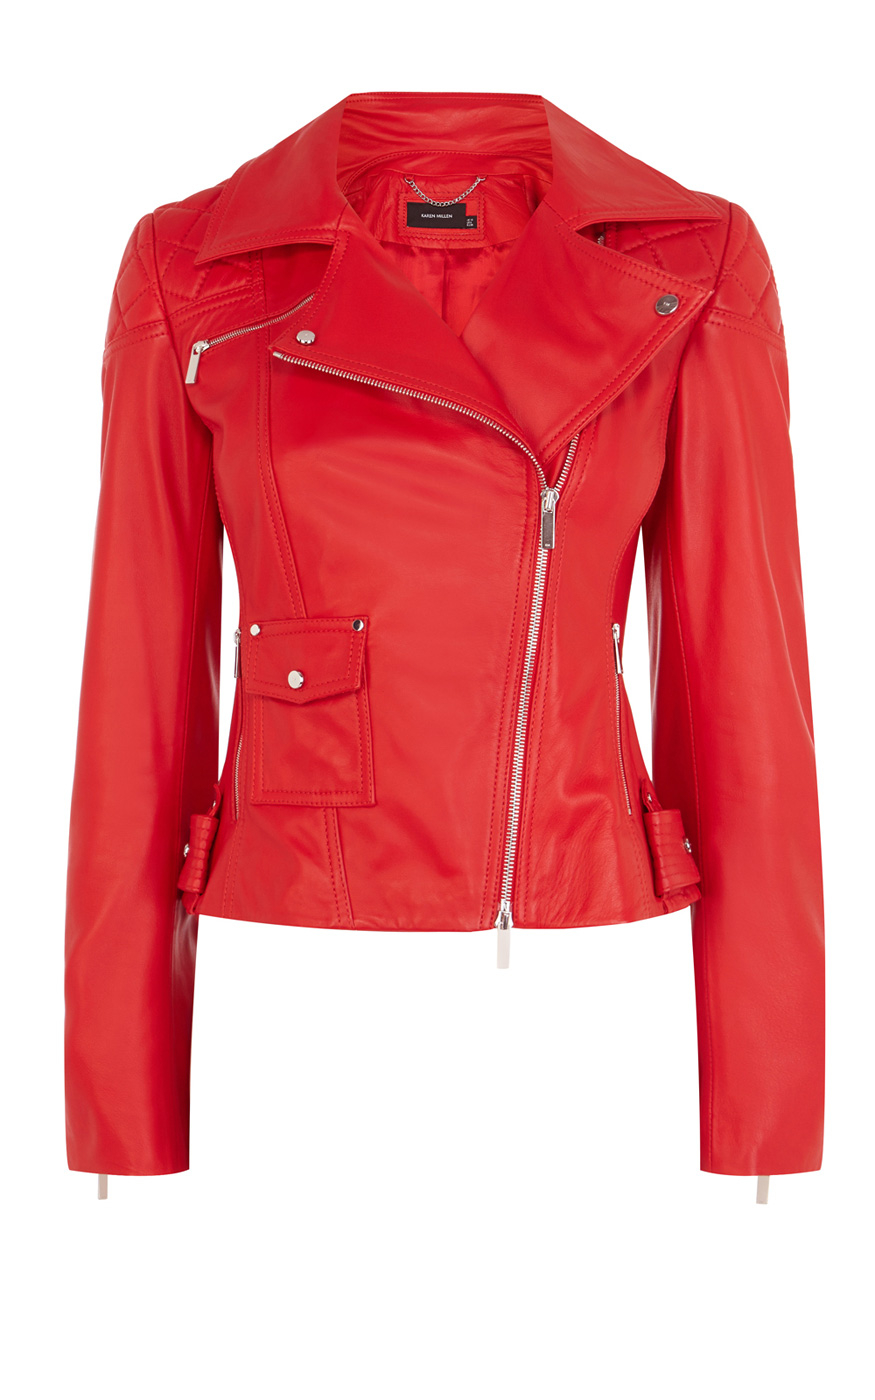 Karen Millen Signature Red Leather Jacket - Lyst